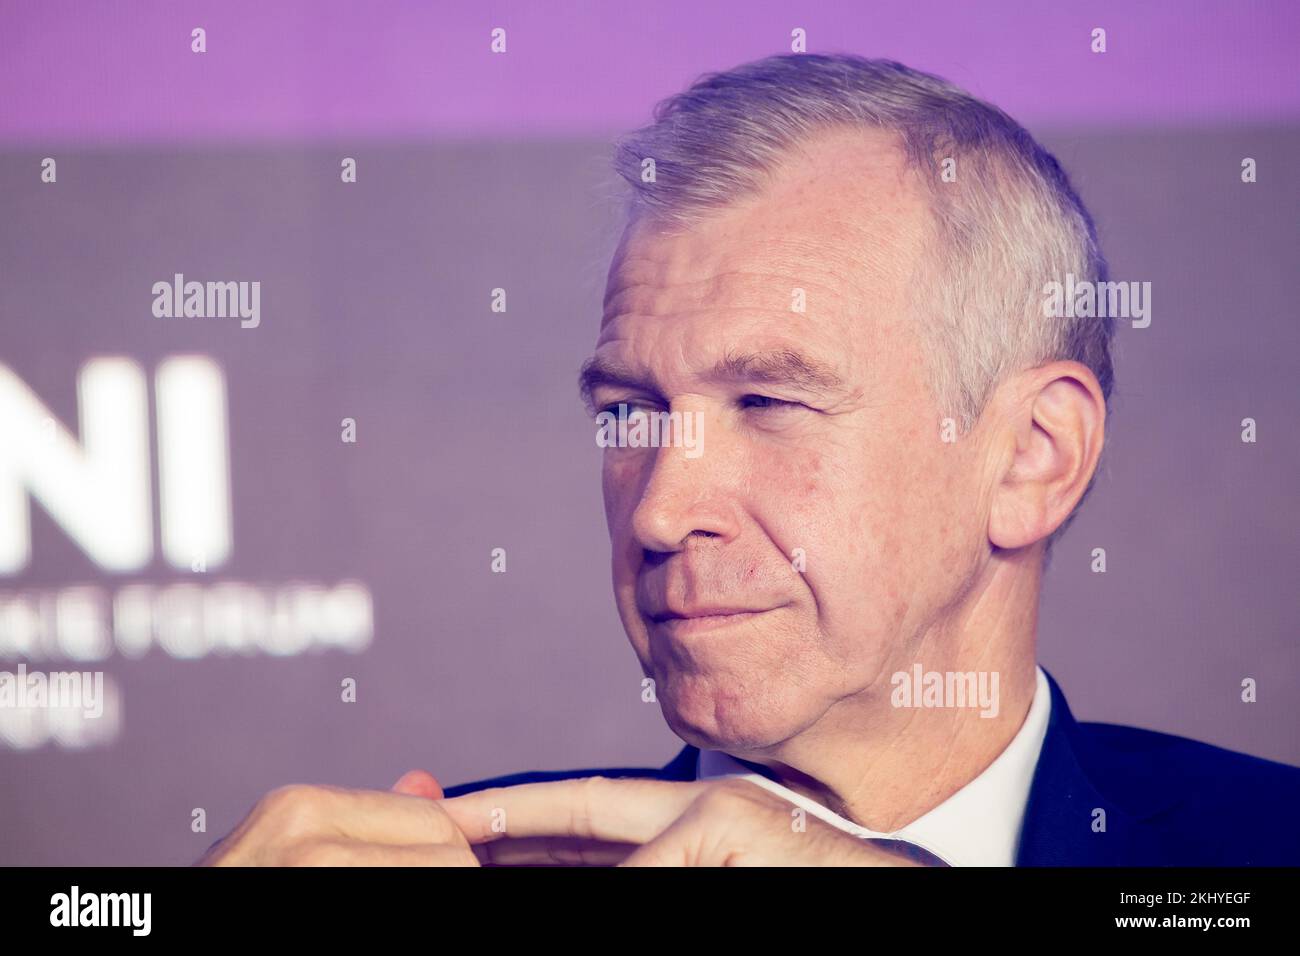 Yves Leterme, político belga y ex primer ministro de Bélgica © Wojciech Strozyk / Alamy Stock Photo Foto de stock